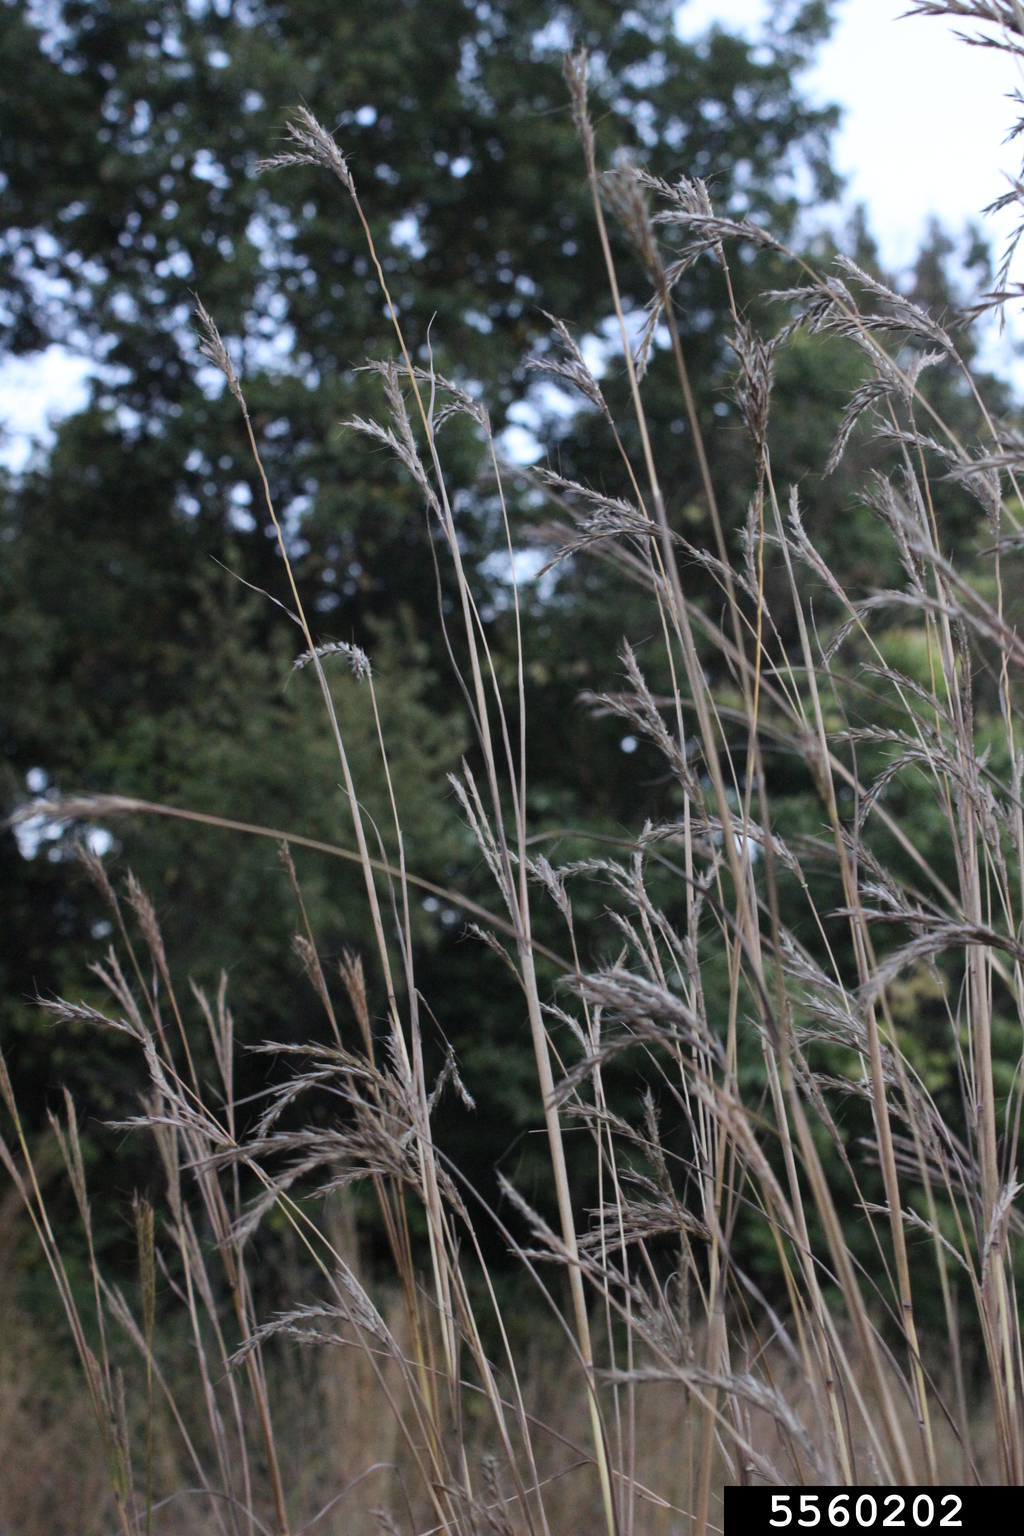 Photograph showing a close-up view of big bluestem grass stalks bearing inflorescences.